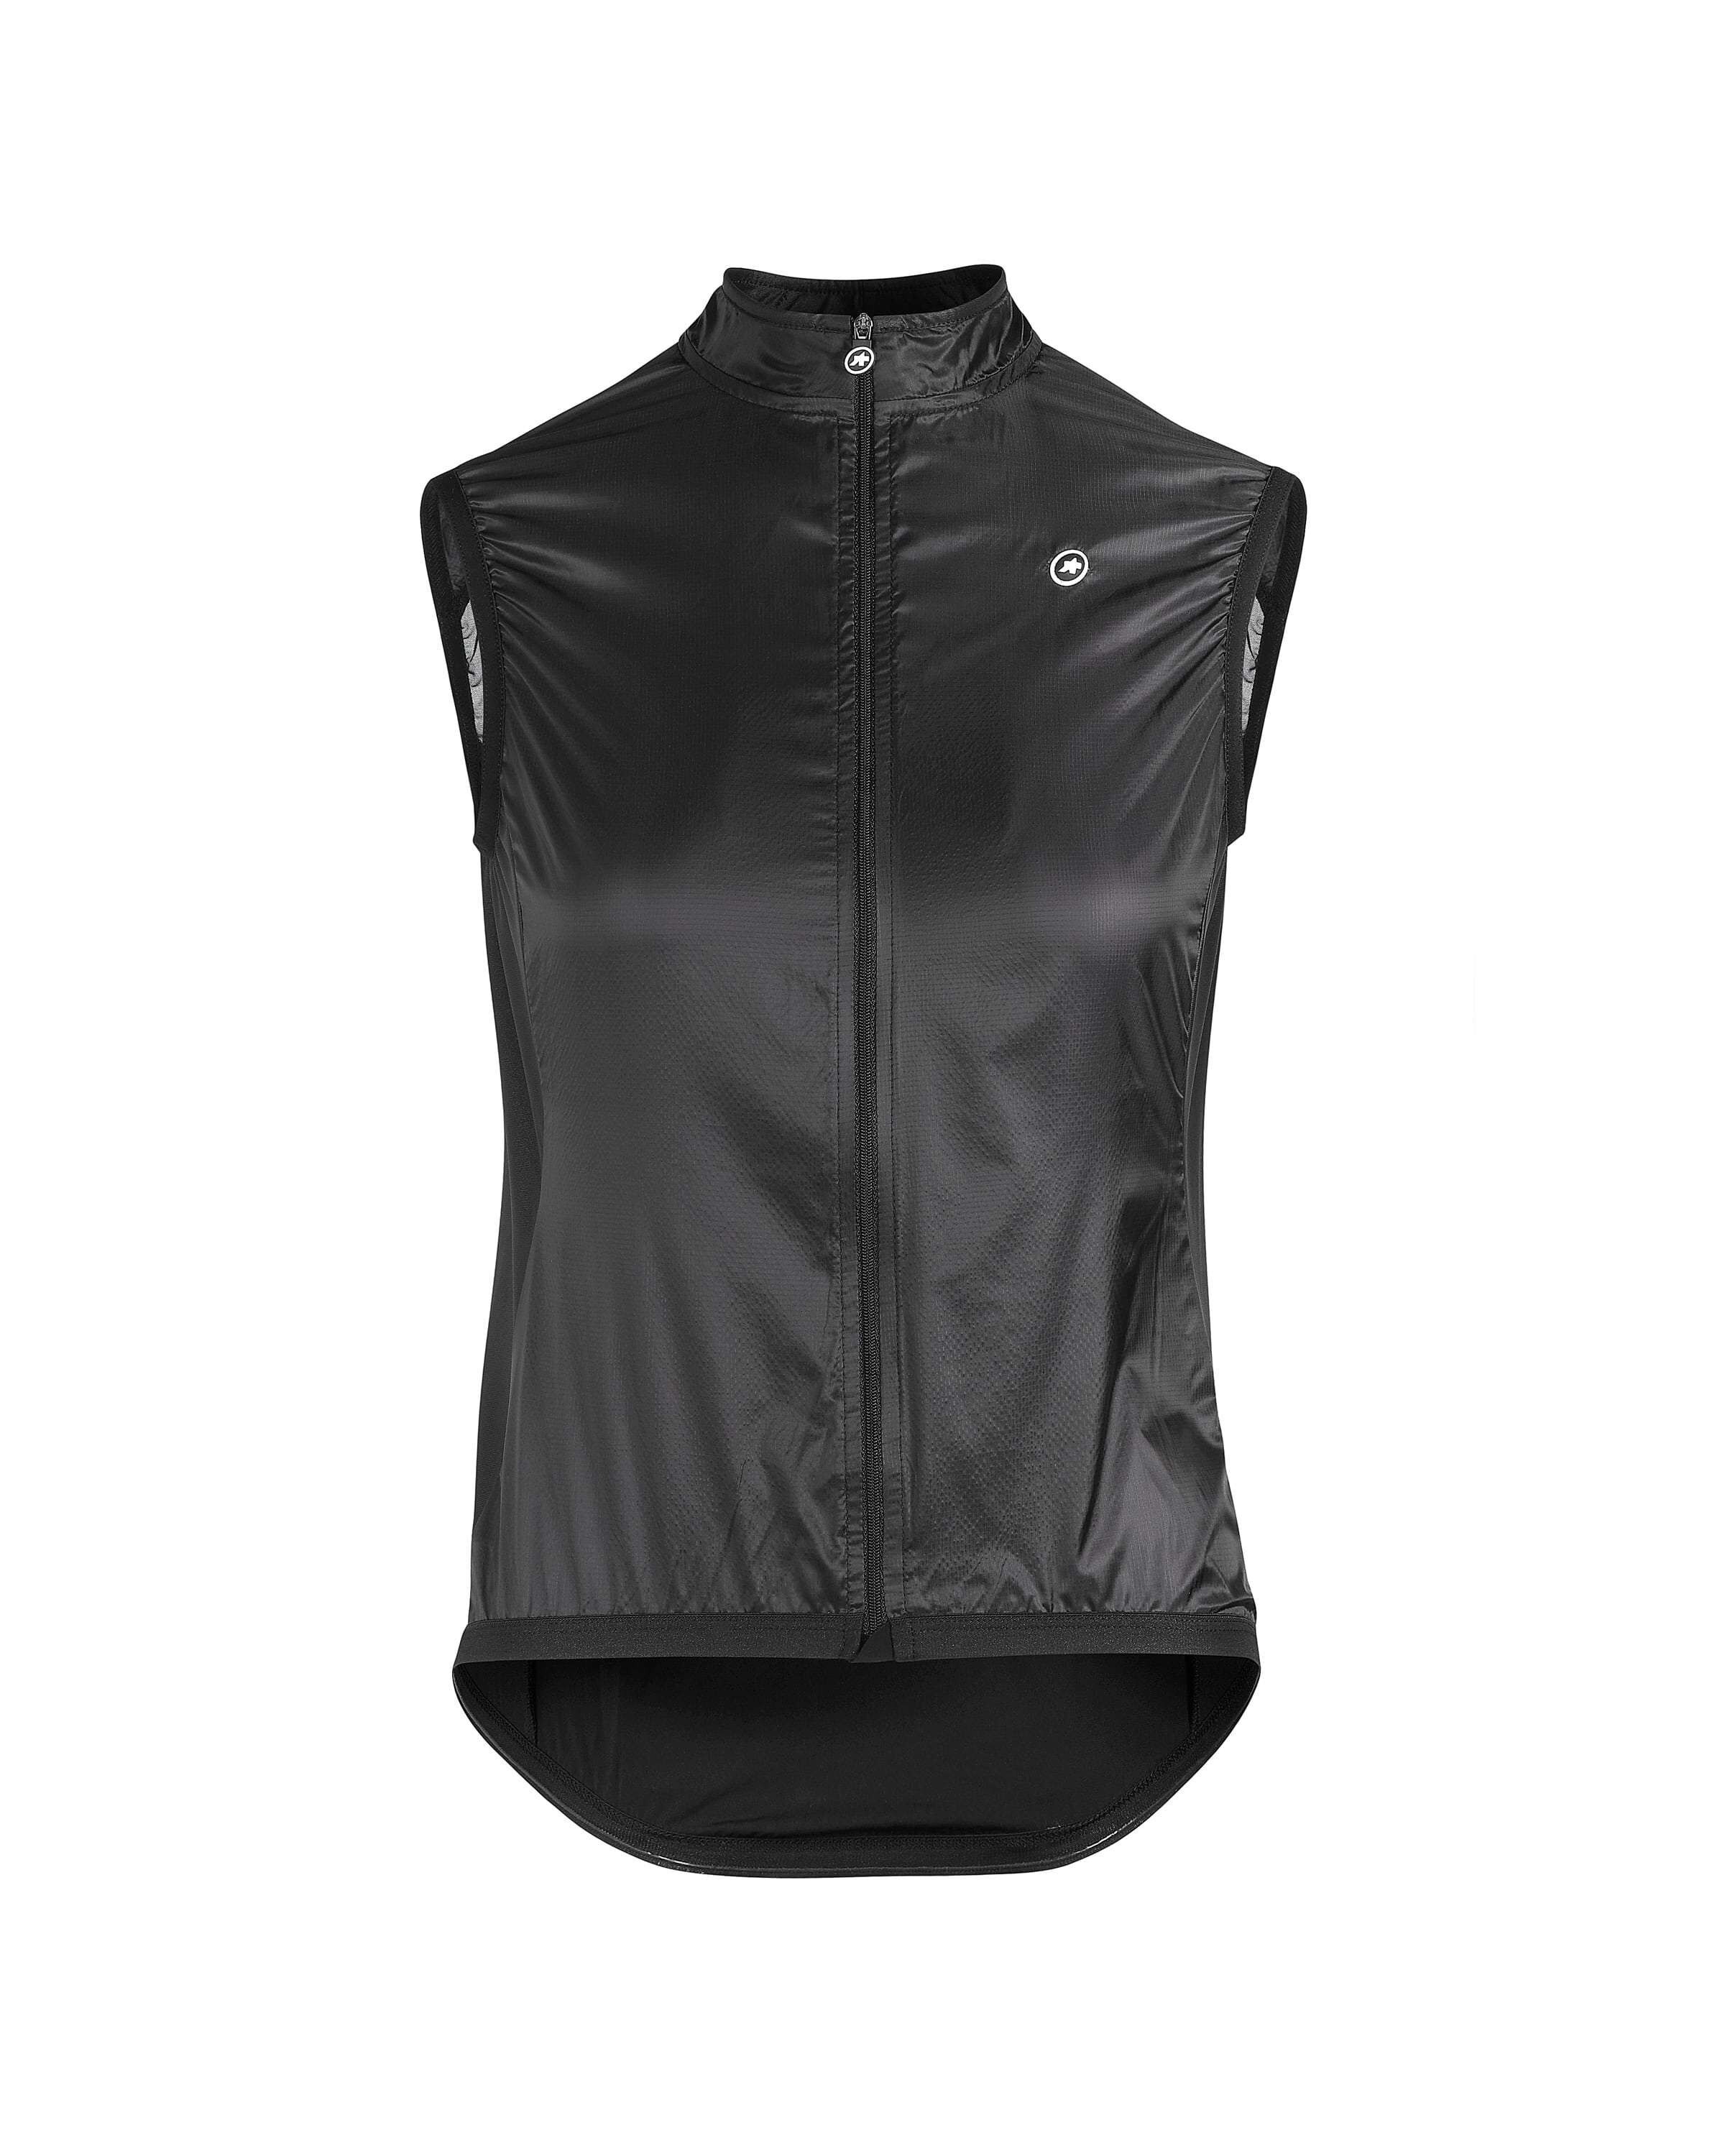 Assos Uma GT Wind Vest - Cycling windproof jacket - Women's